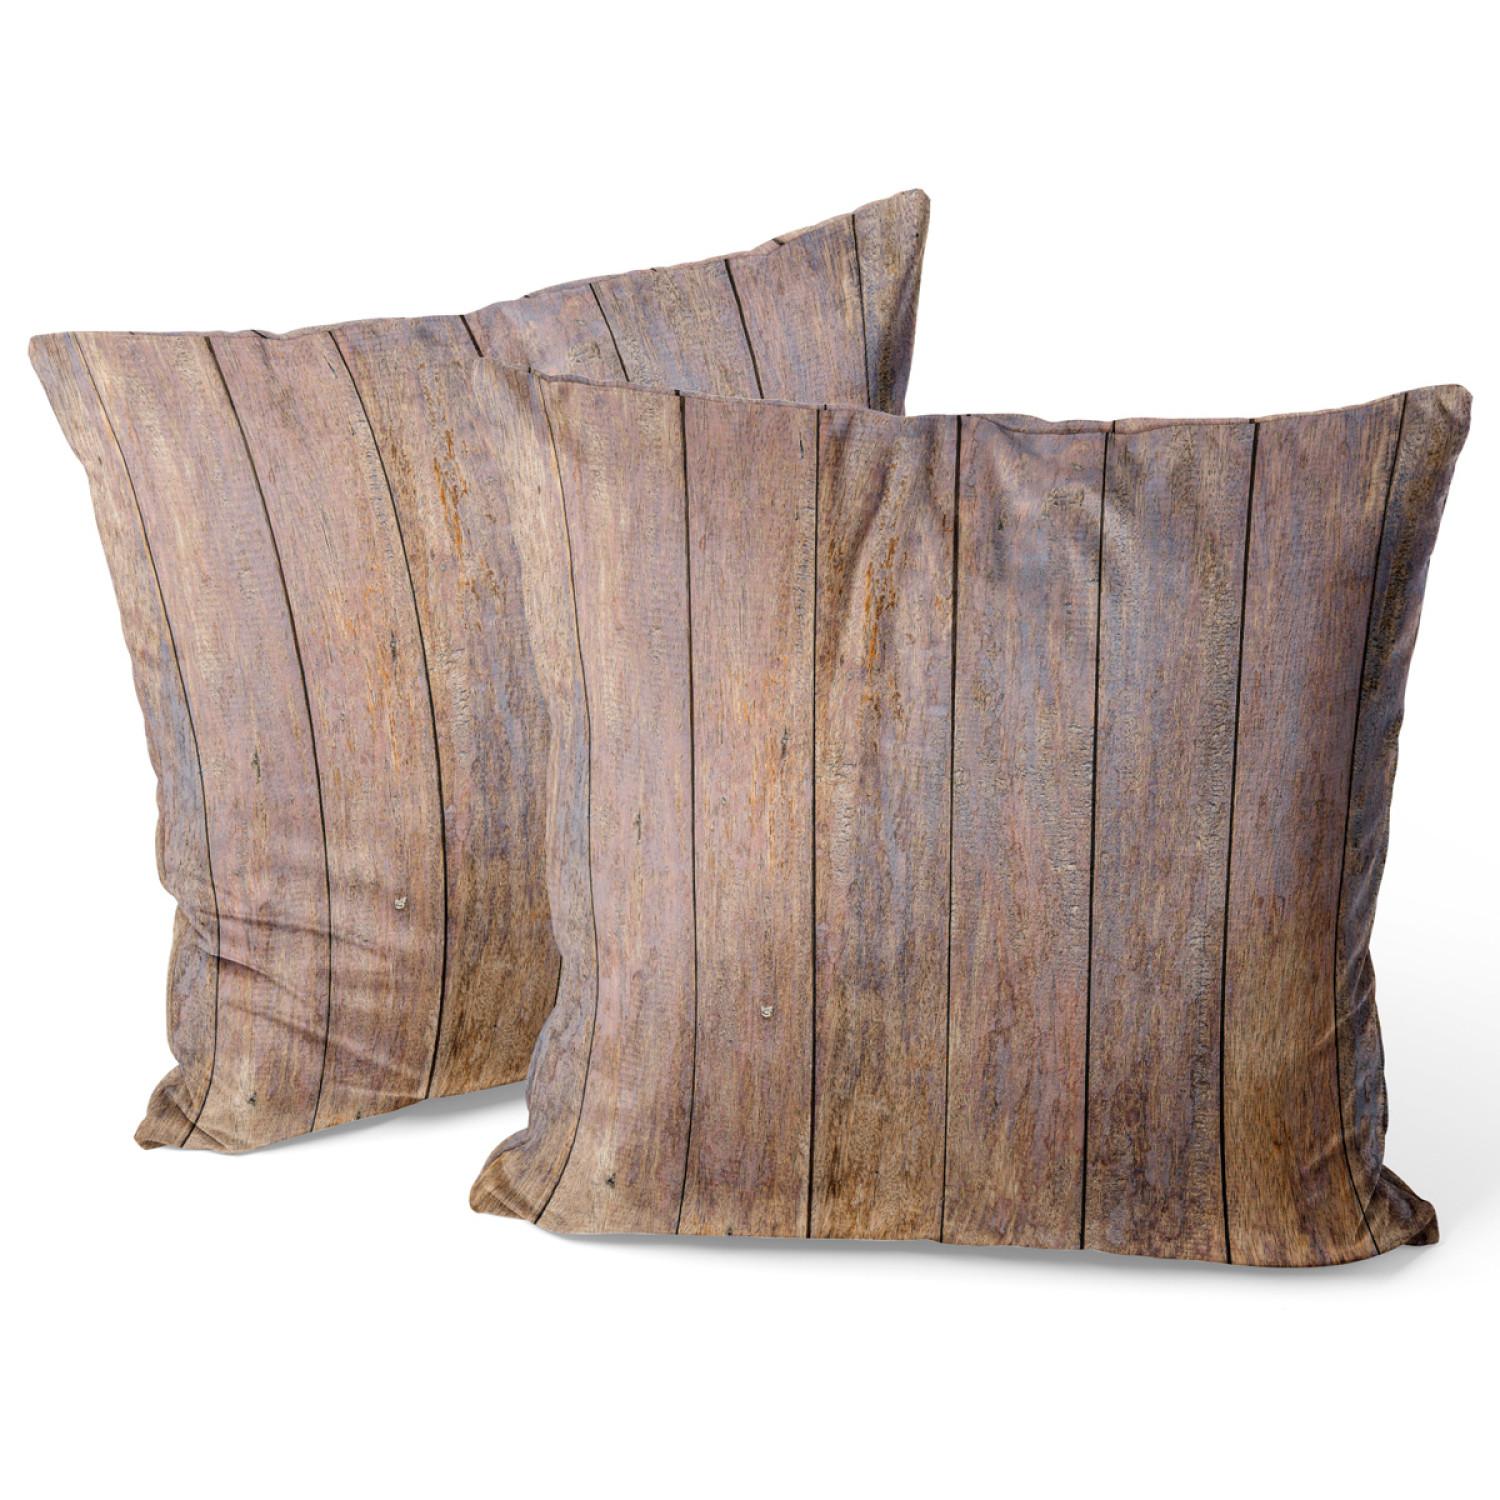 Decorative Velor Pillow Exotic wood - pattern imitating plank texture